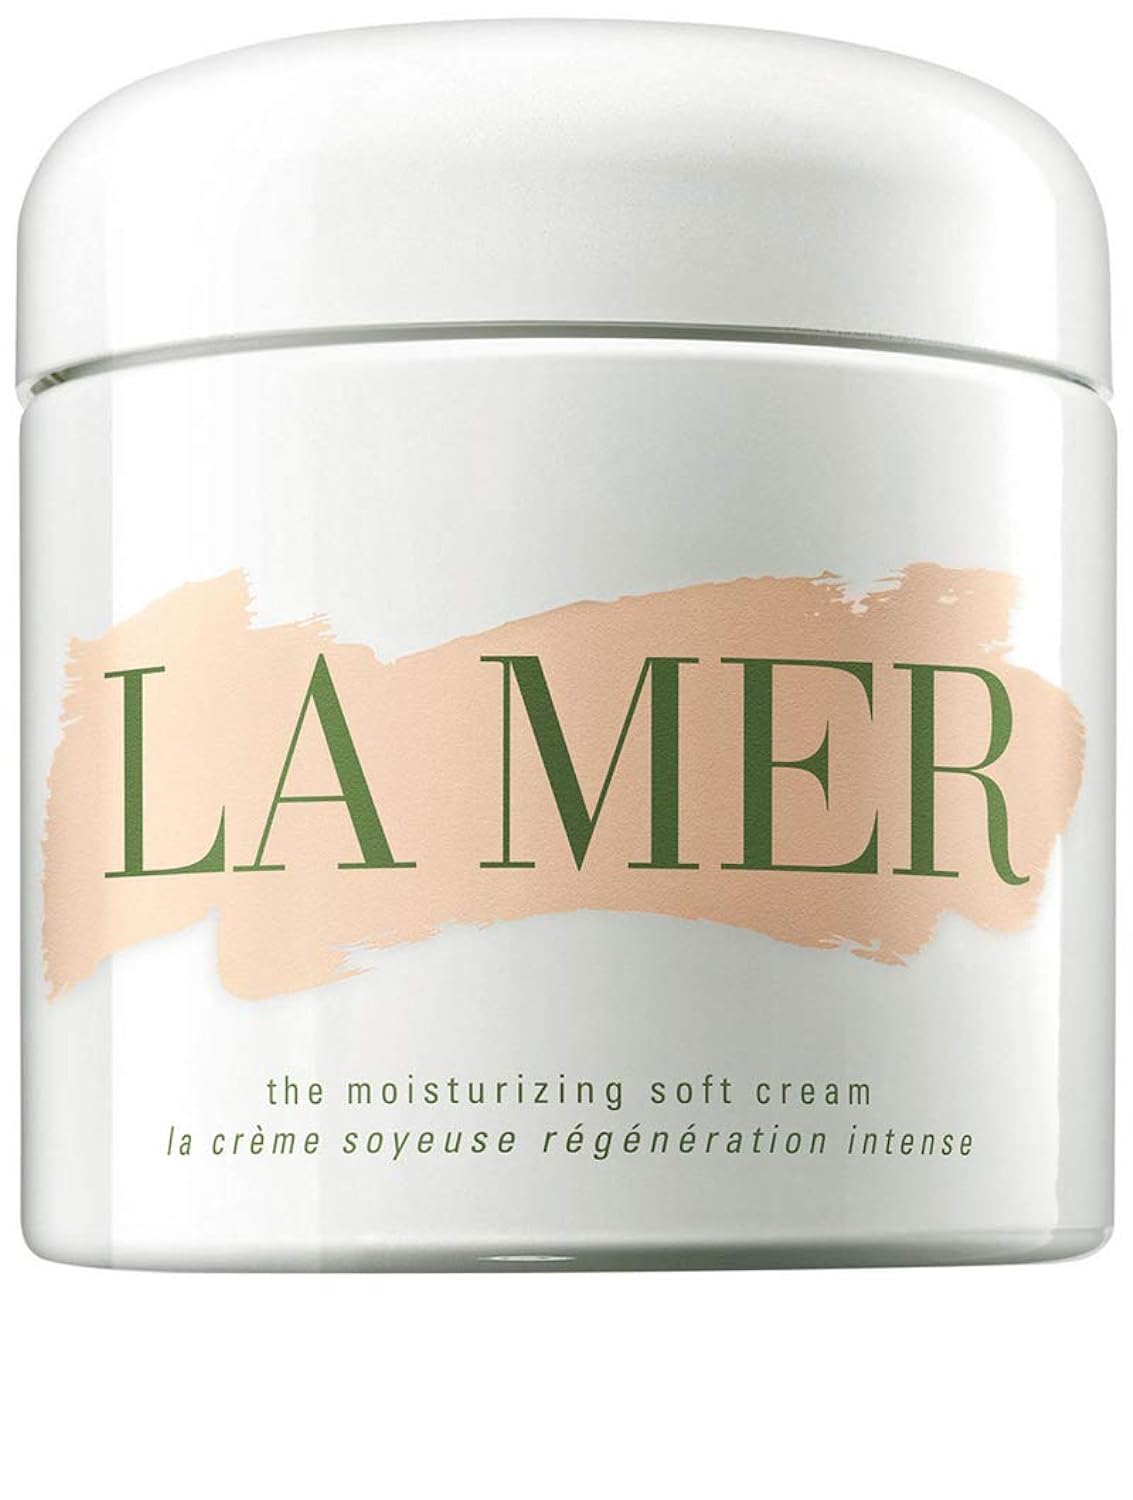 LA MER moisturizing soft cream 30 ml